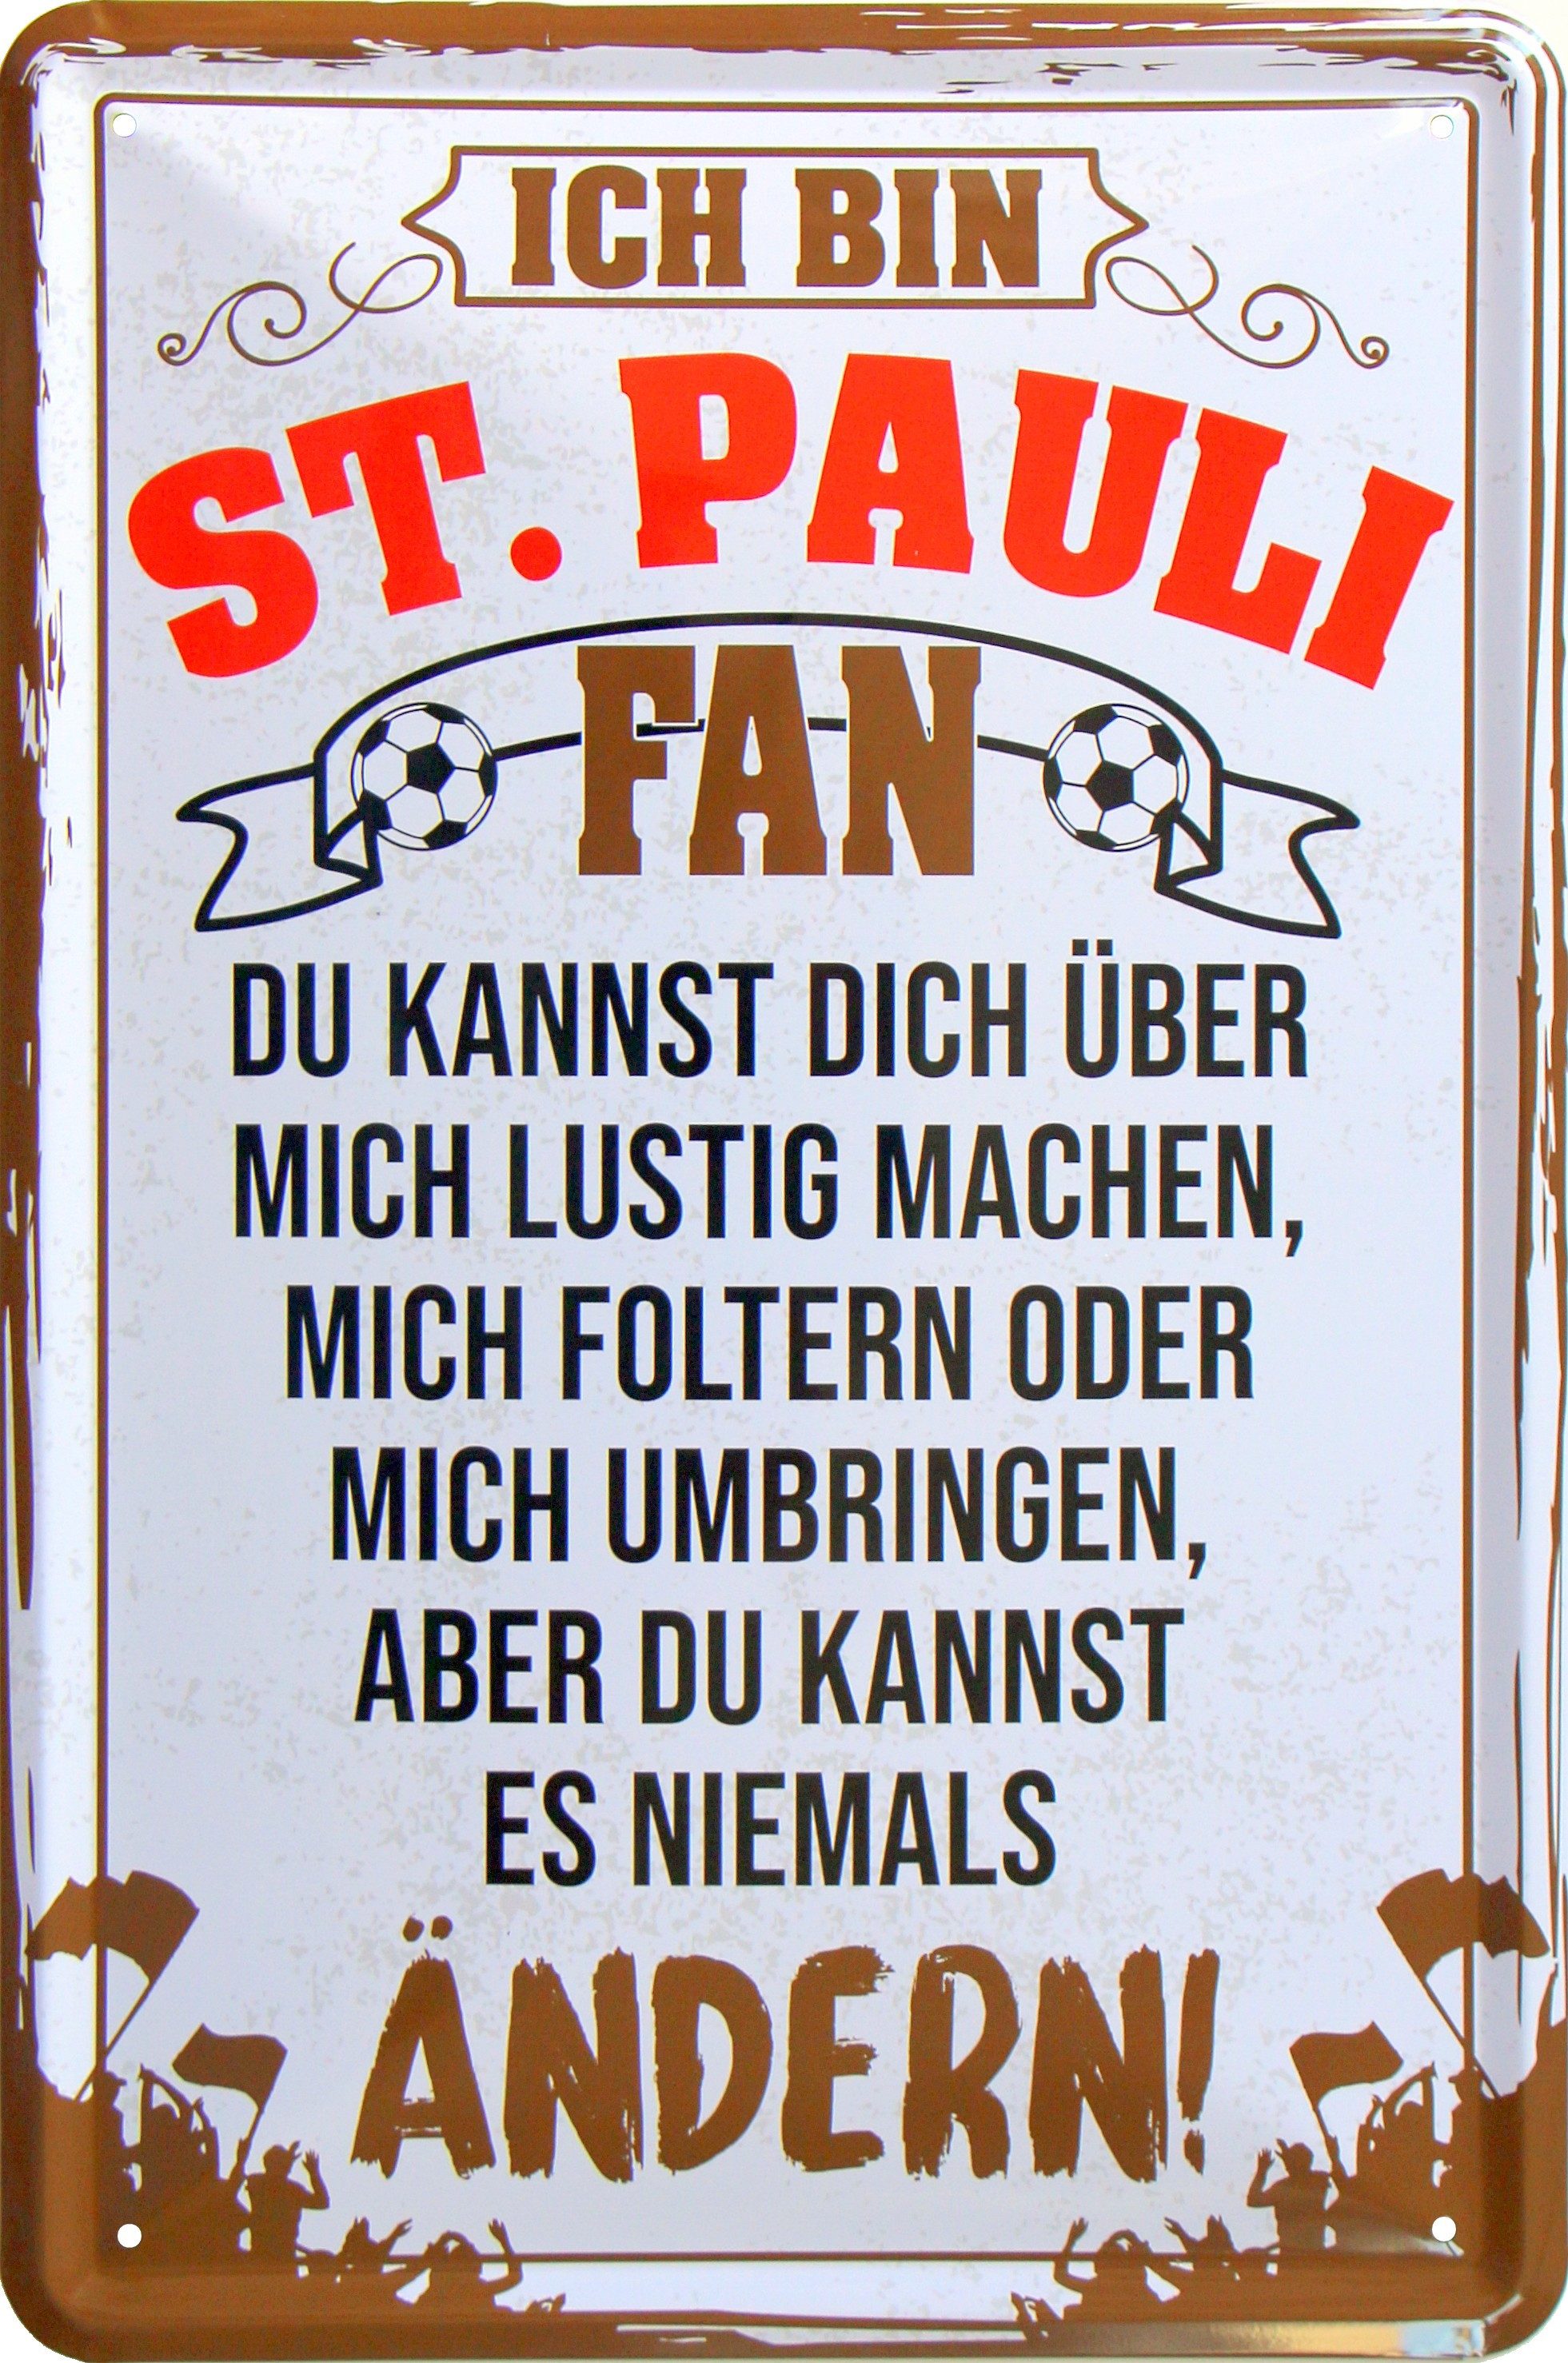 WOGEKA ART Metallbild Ich bin St. Pauli Fan - 20 x 30 cm Retro Blechschild Fußball Sport